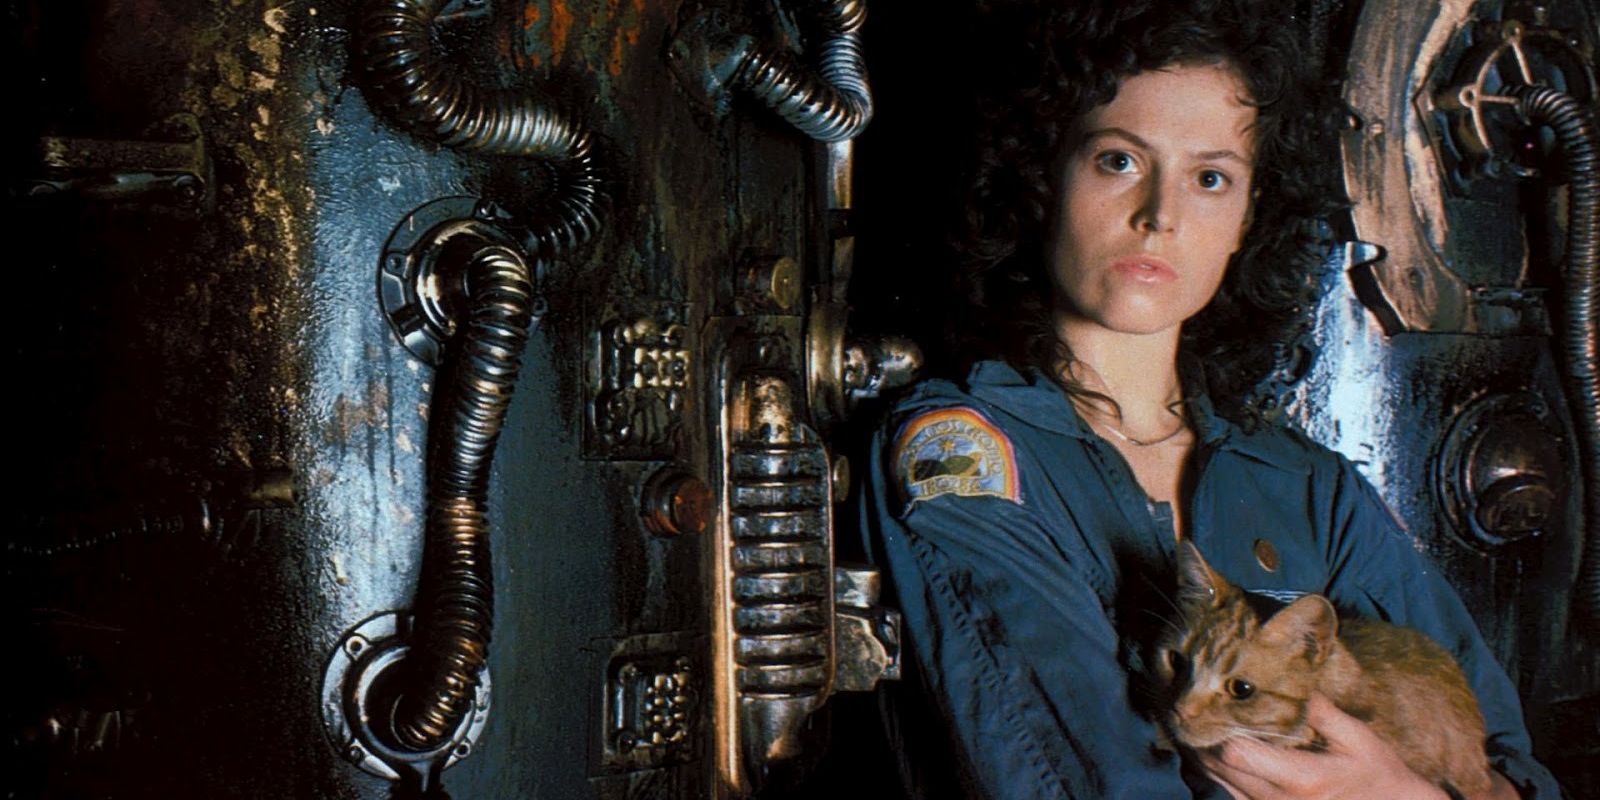 Sigourney Weave as Ellen Ripley holds on the the cat Jones (Jonesy) in the Alien film